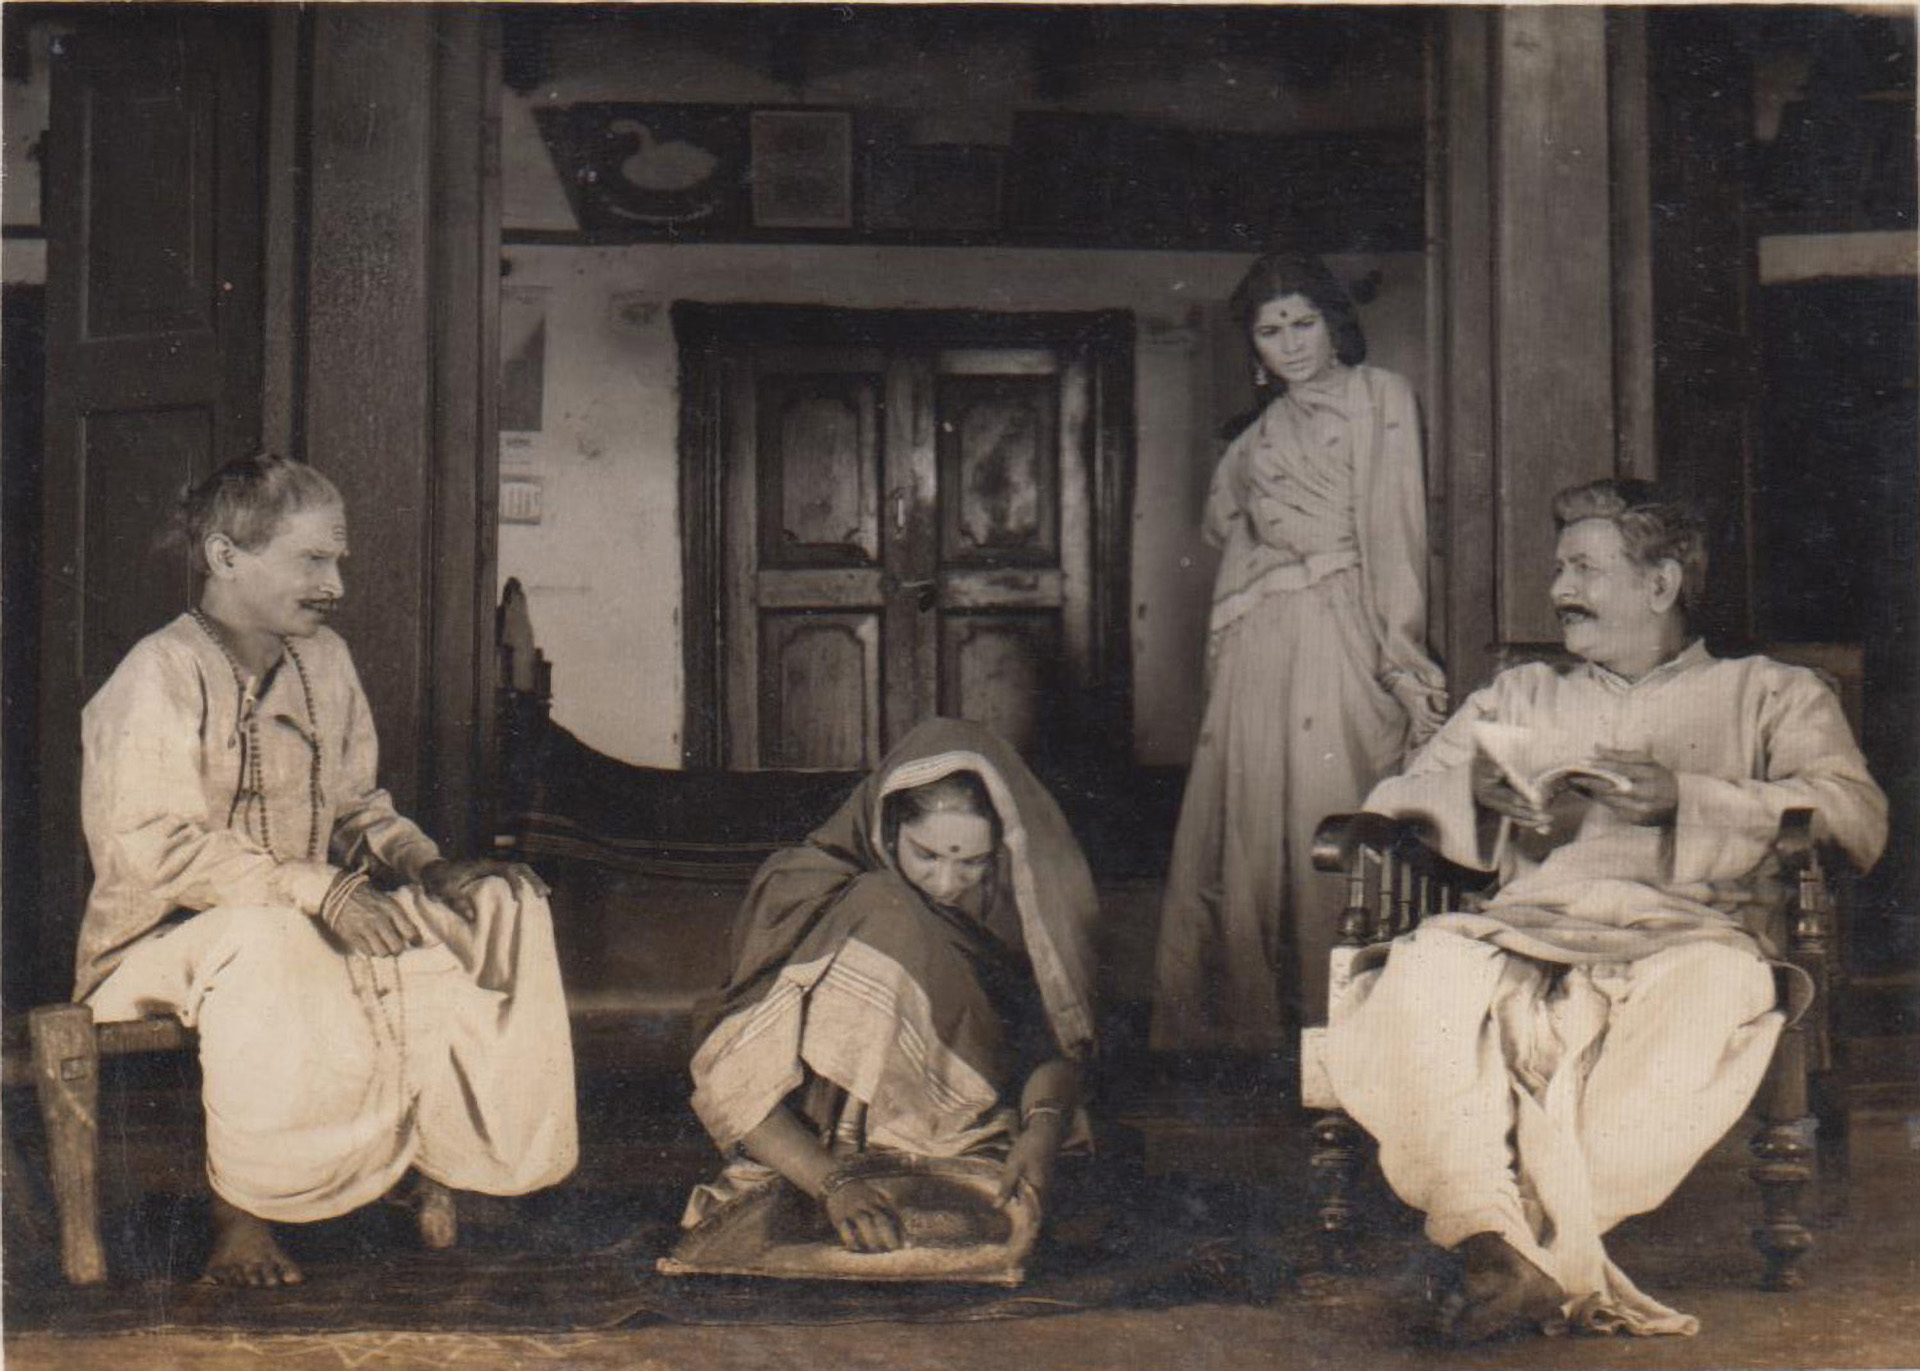 How the first Chhattisgarhi film questioned caste